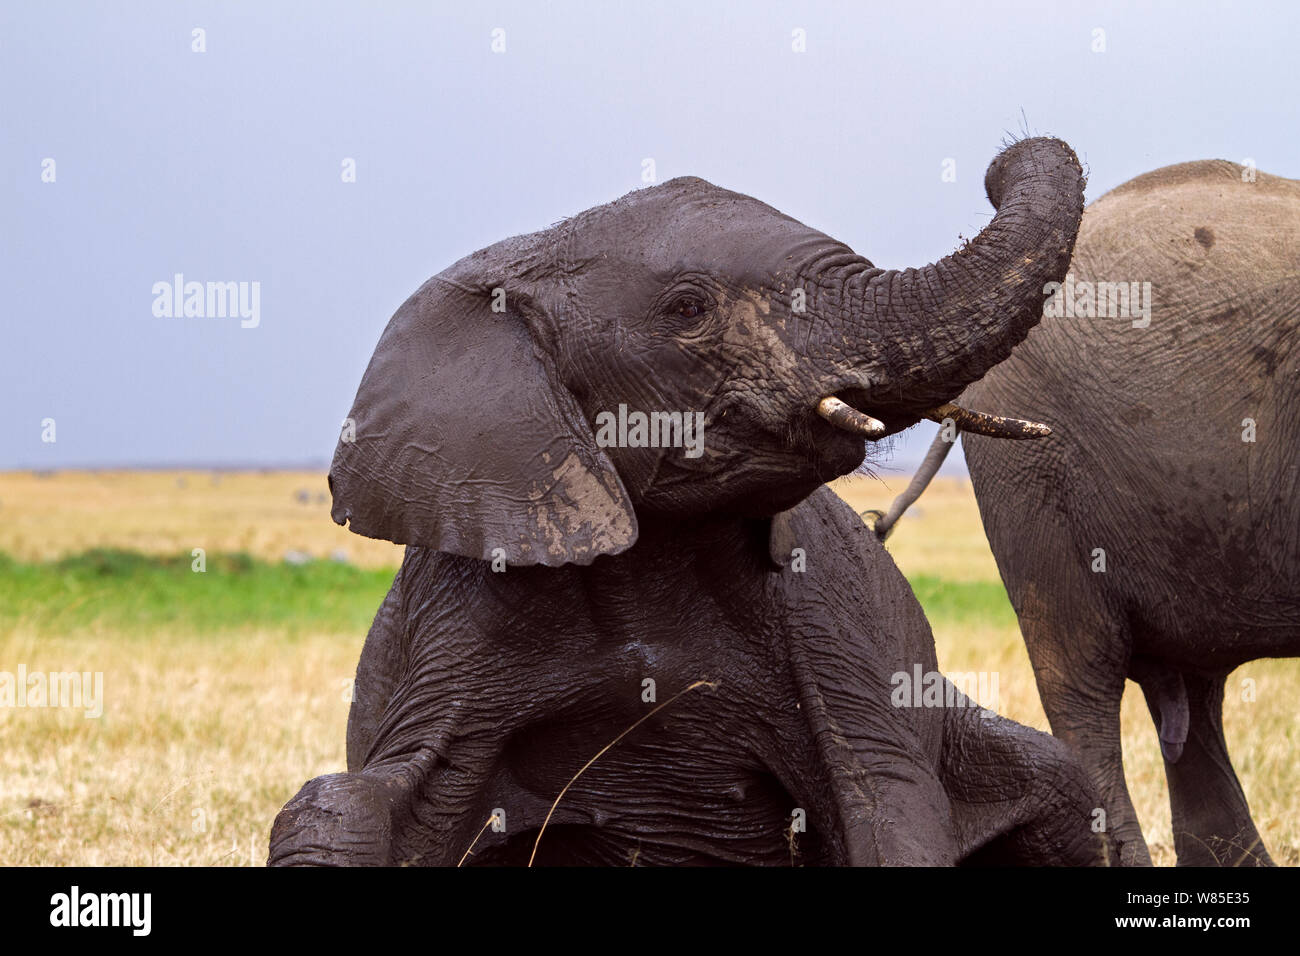 African elephant (Loxodonta africana) juvenile covered in mud after wallowing. Maasai Mara National Reserve, Kenya. Feb 2012. Stock Photo